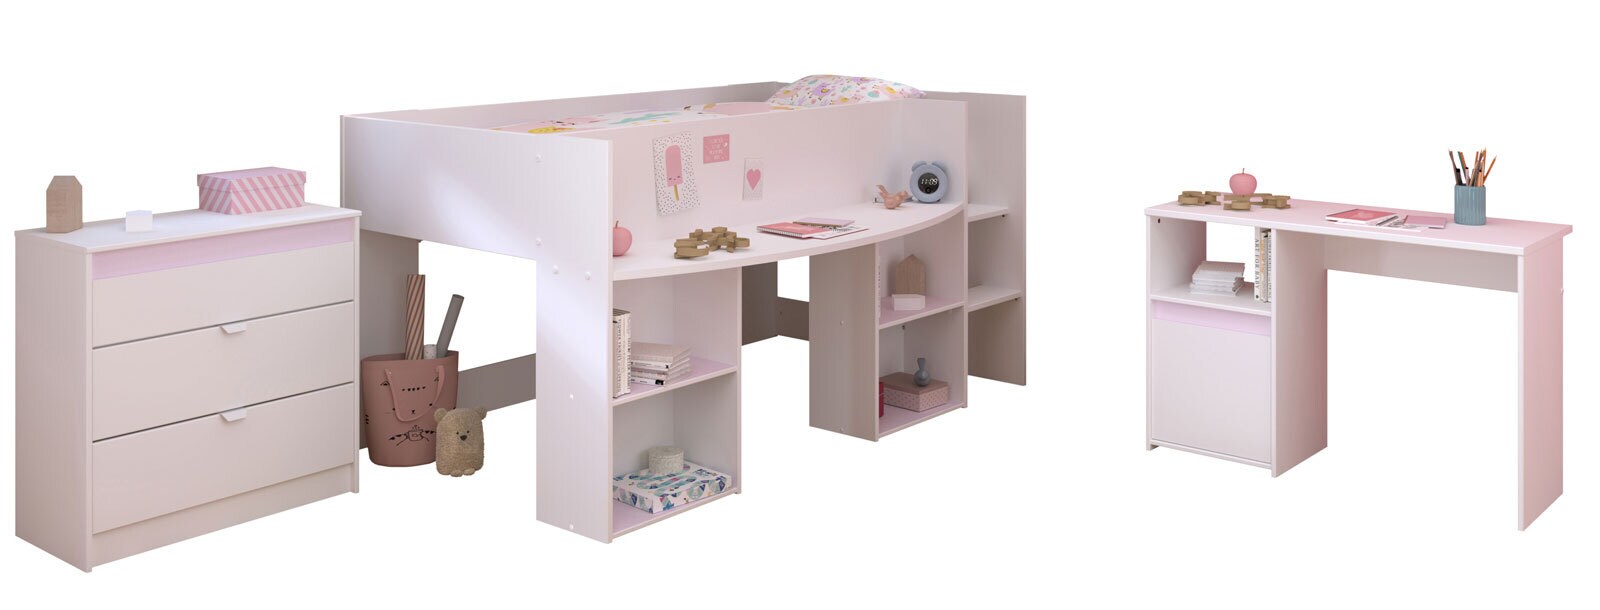 Parisot Kinderzimmer PIROUETTE 15 weiß / grau / rosa